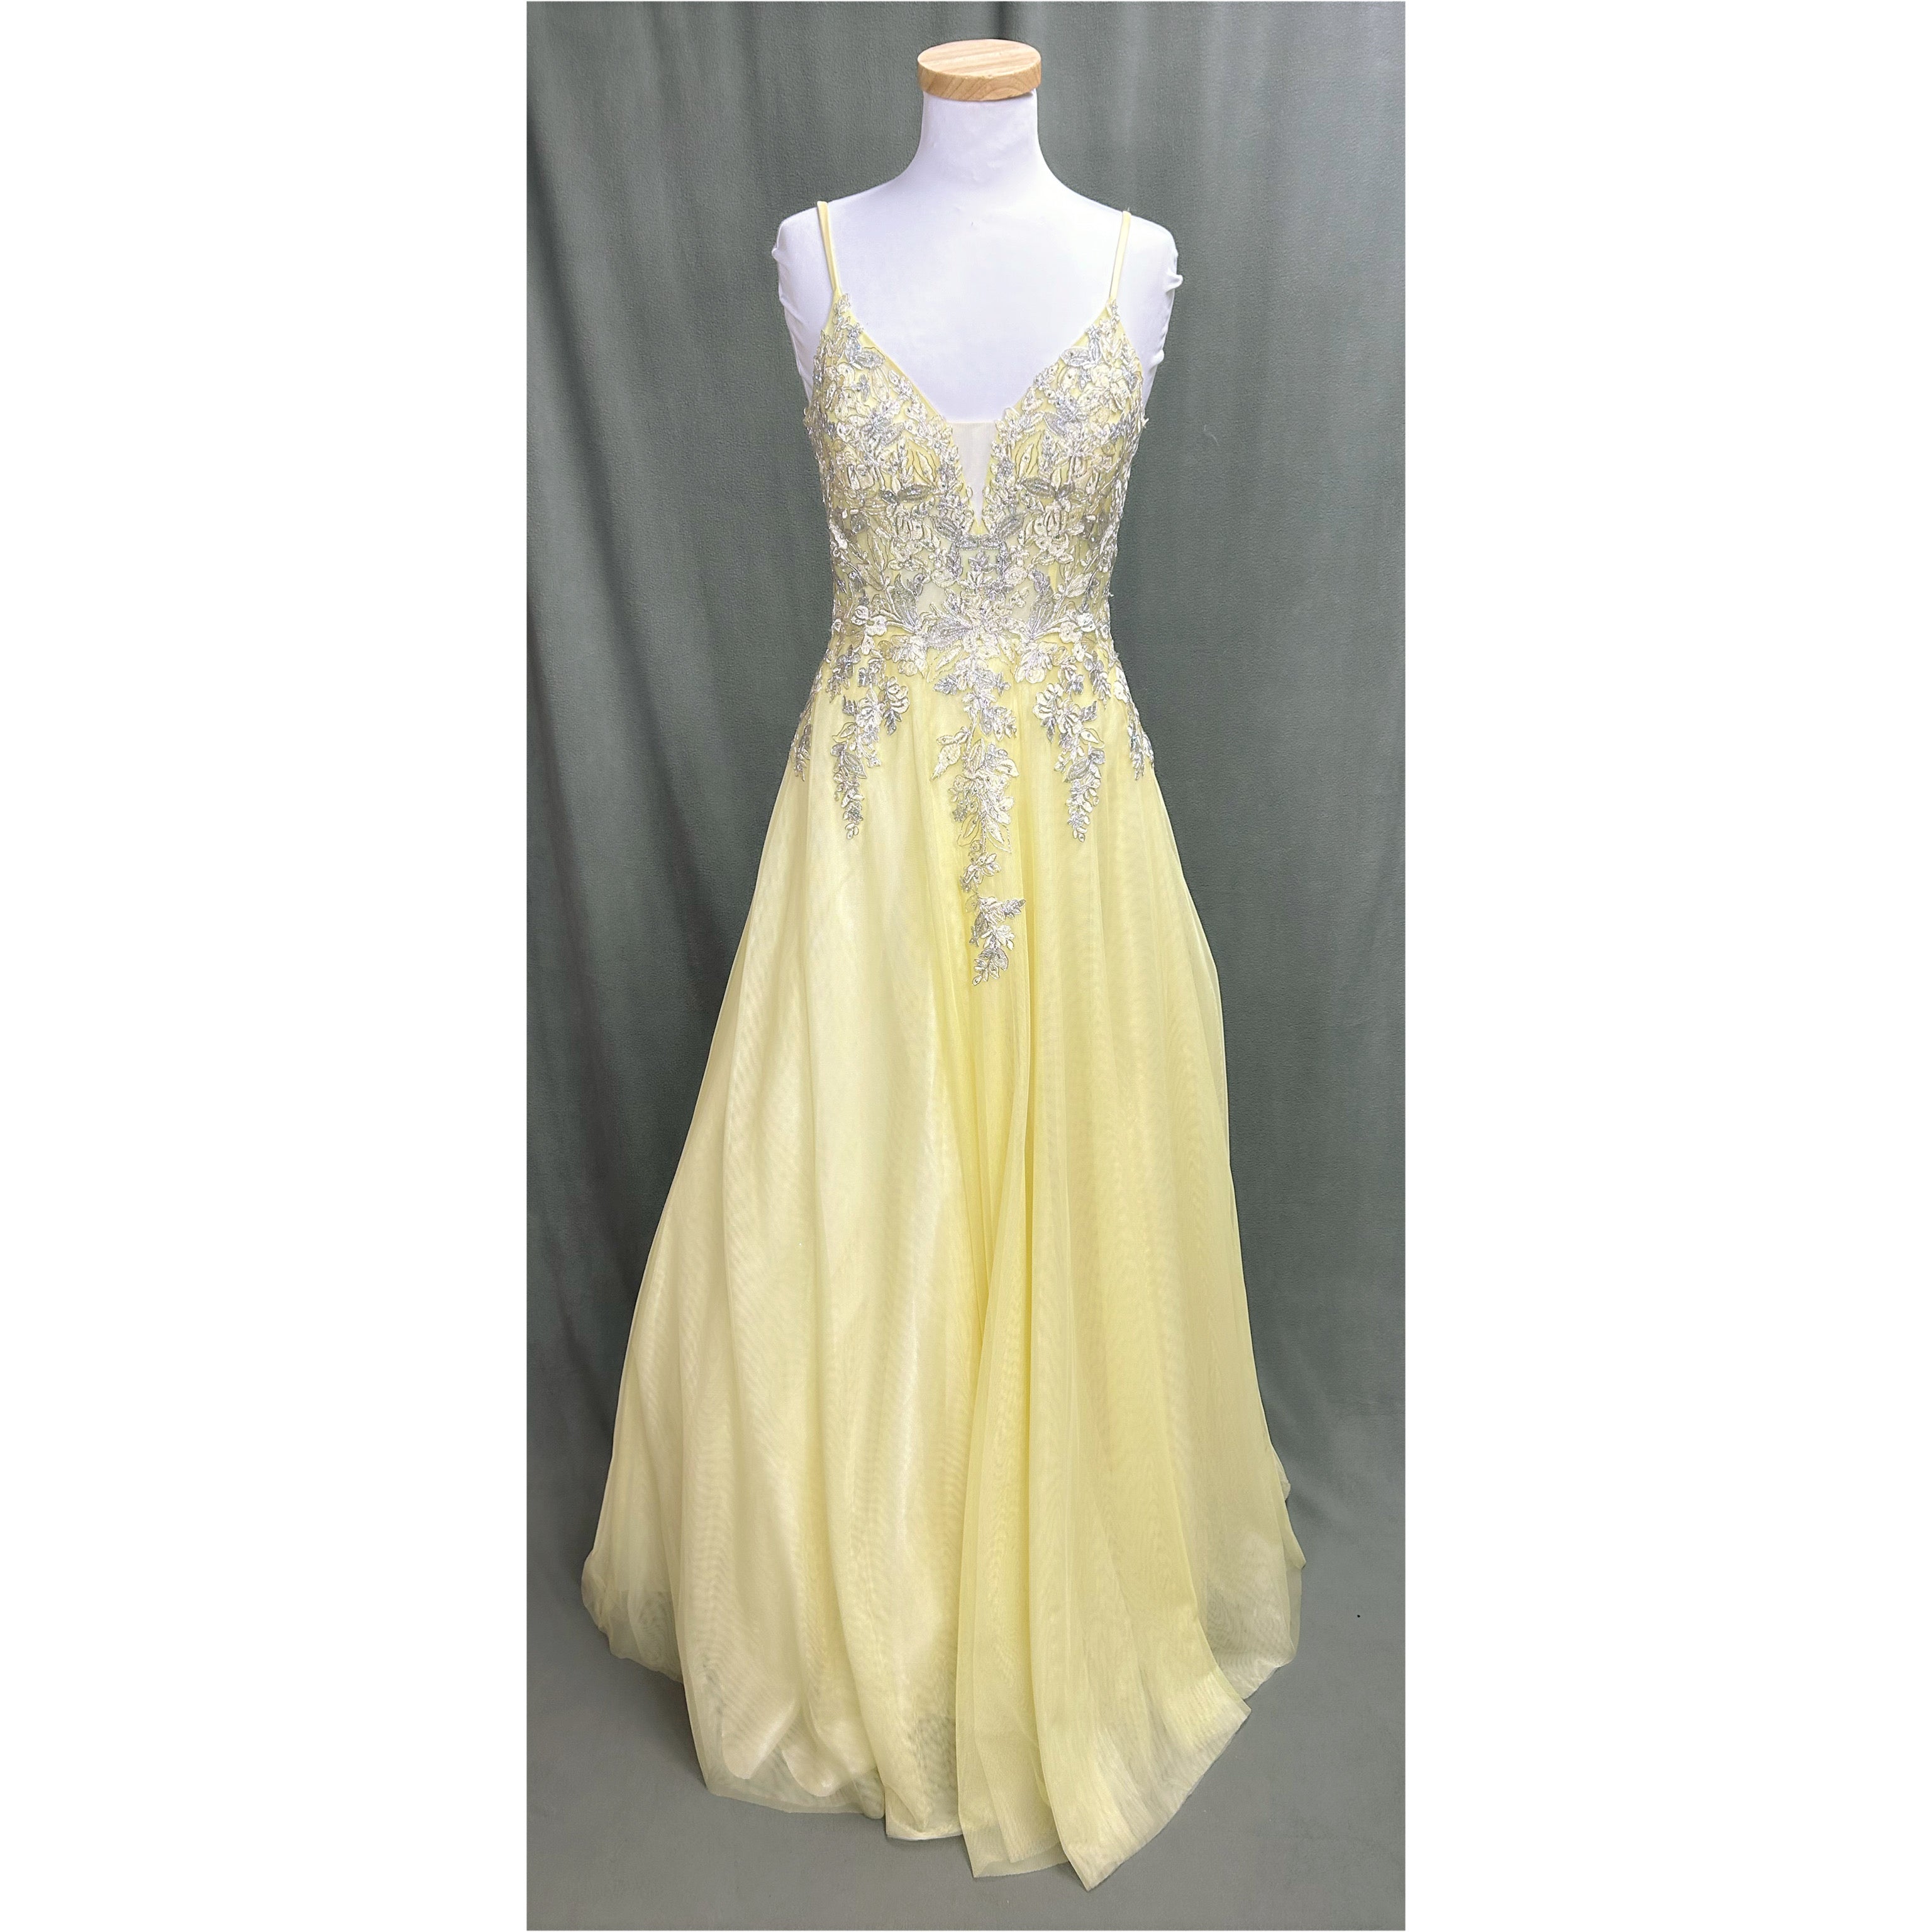 Xscape yellow dress, size 6